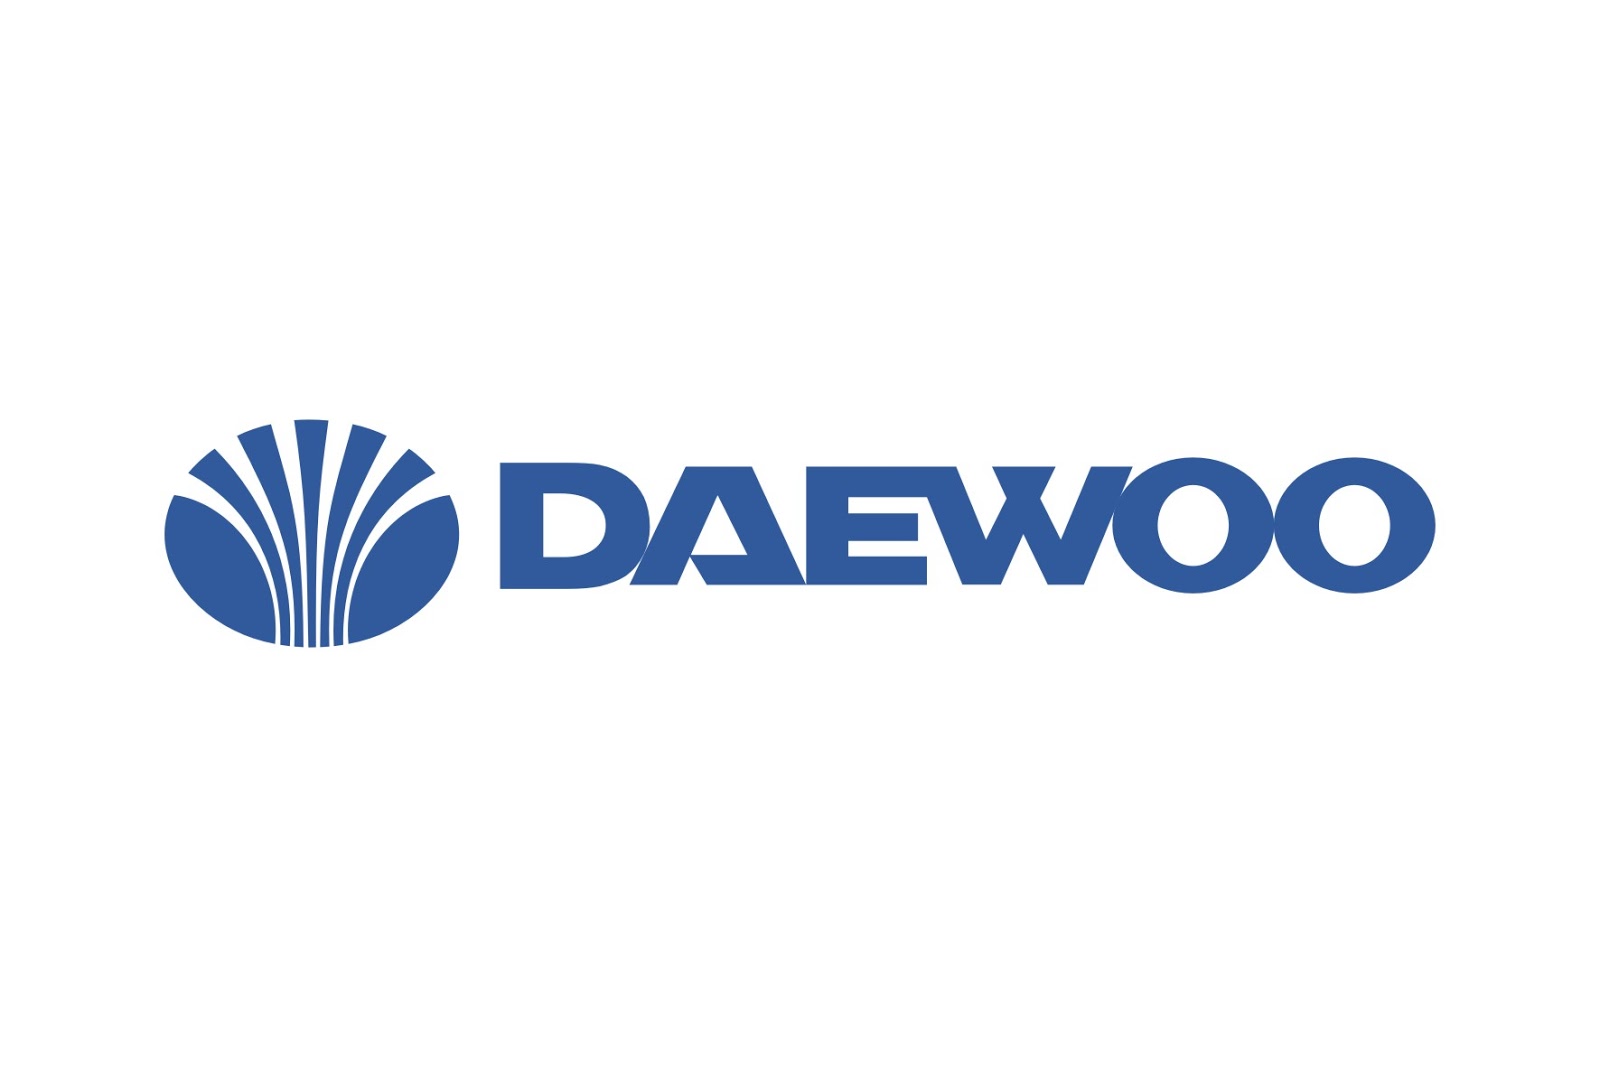 Daewoo symbol